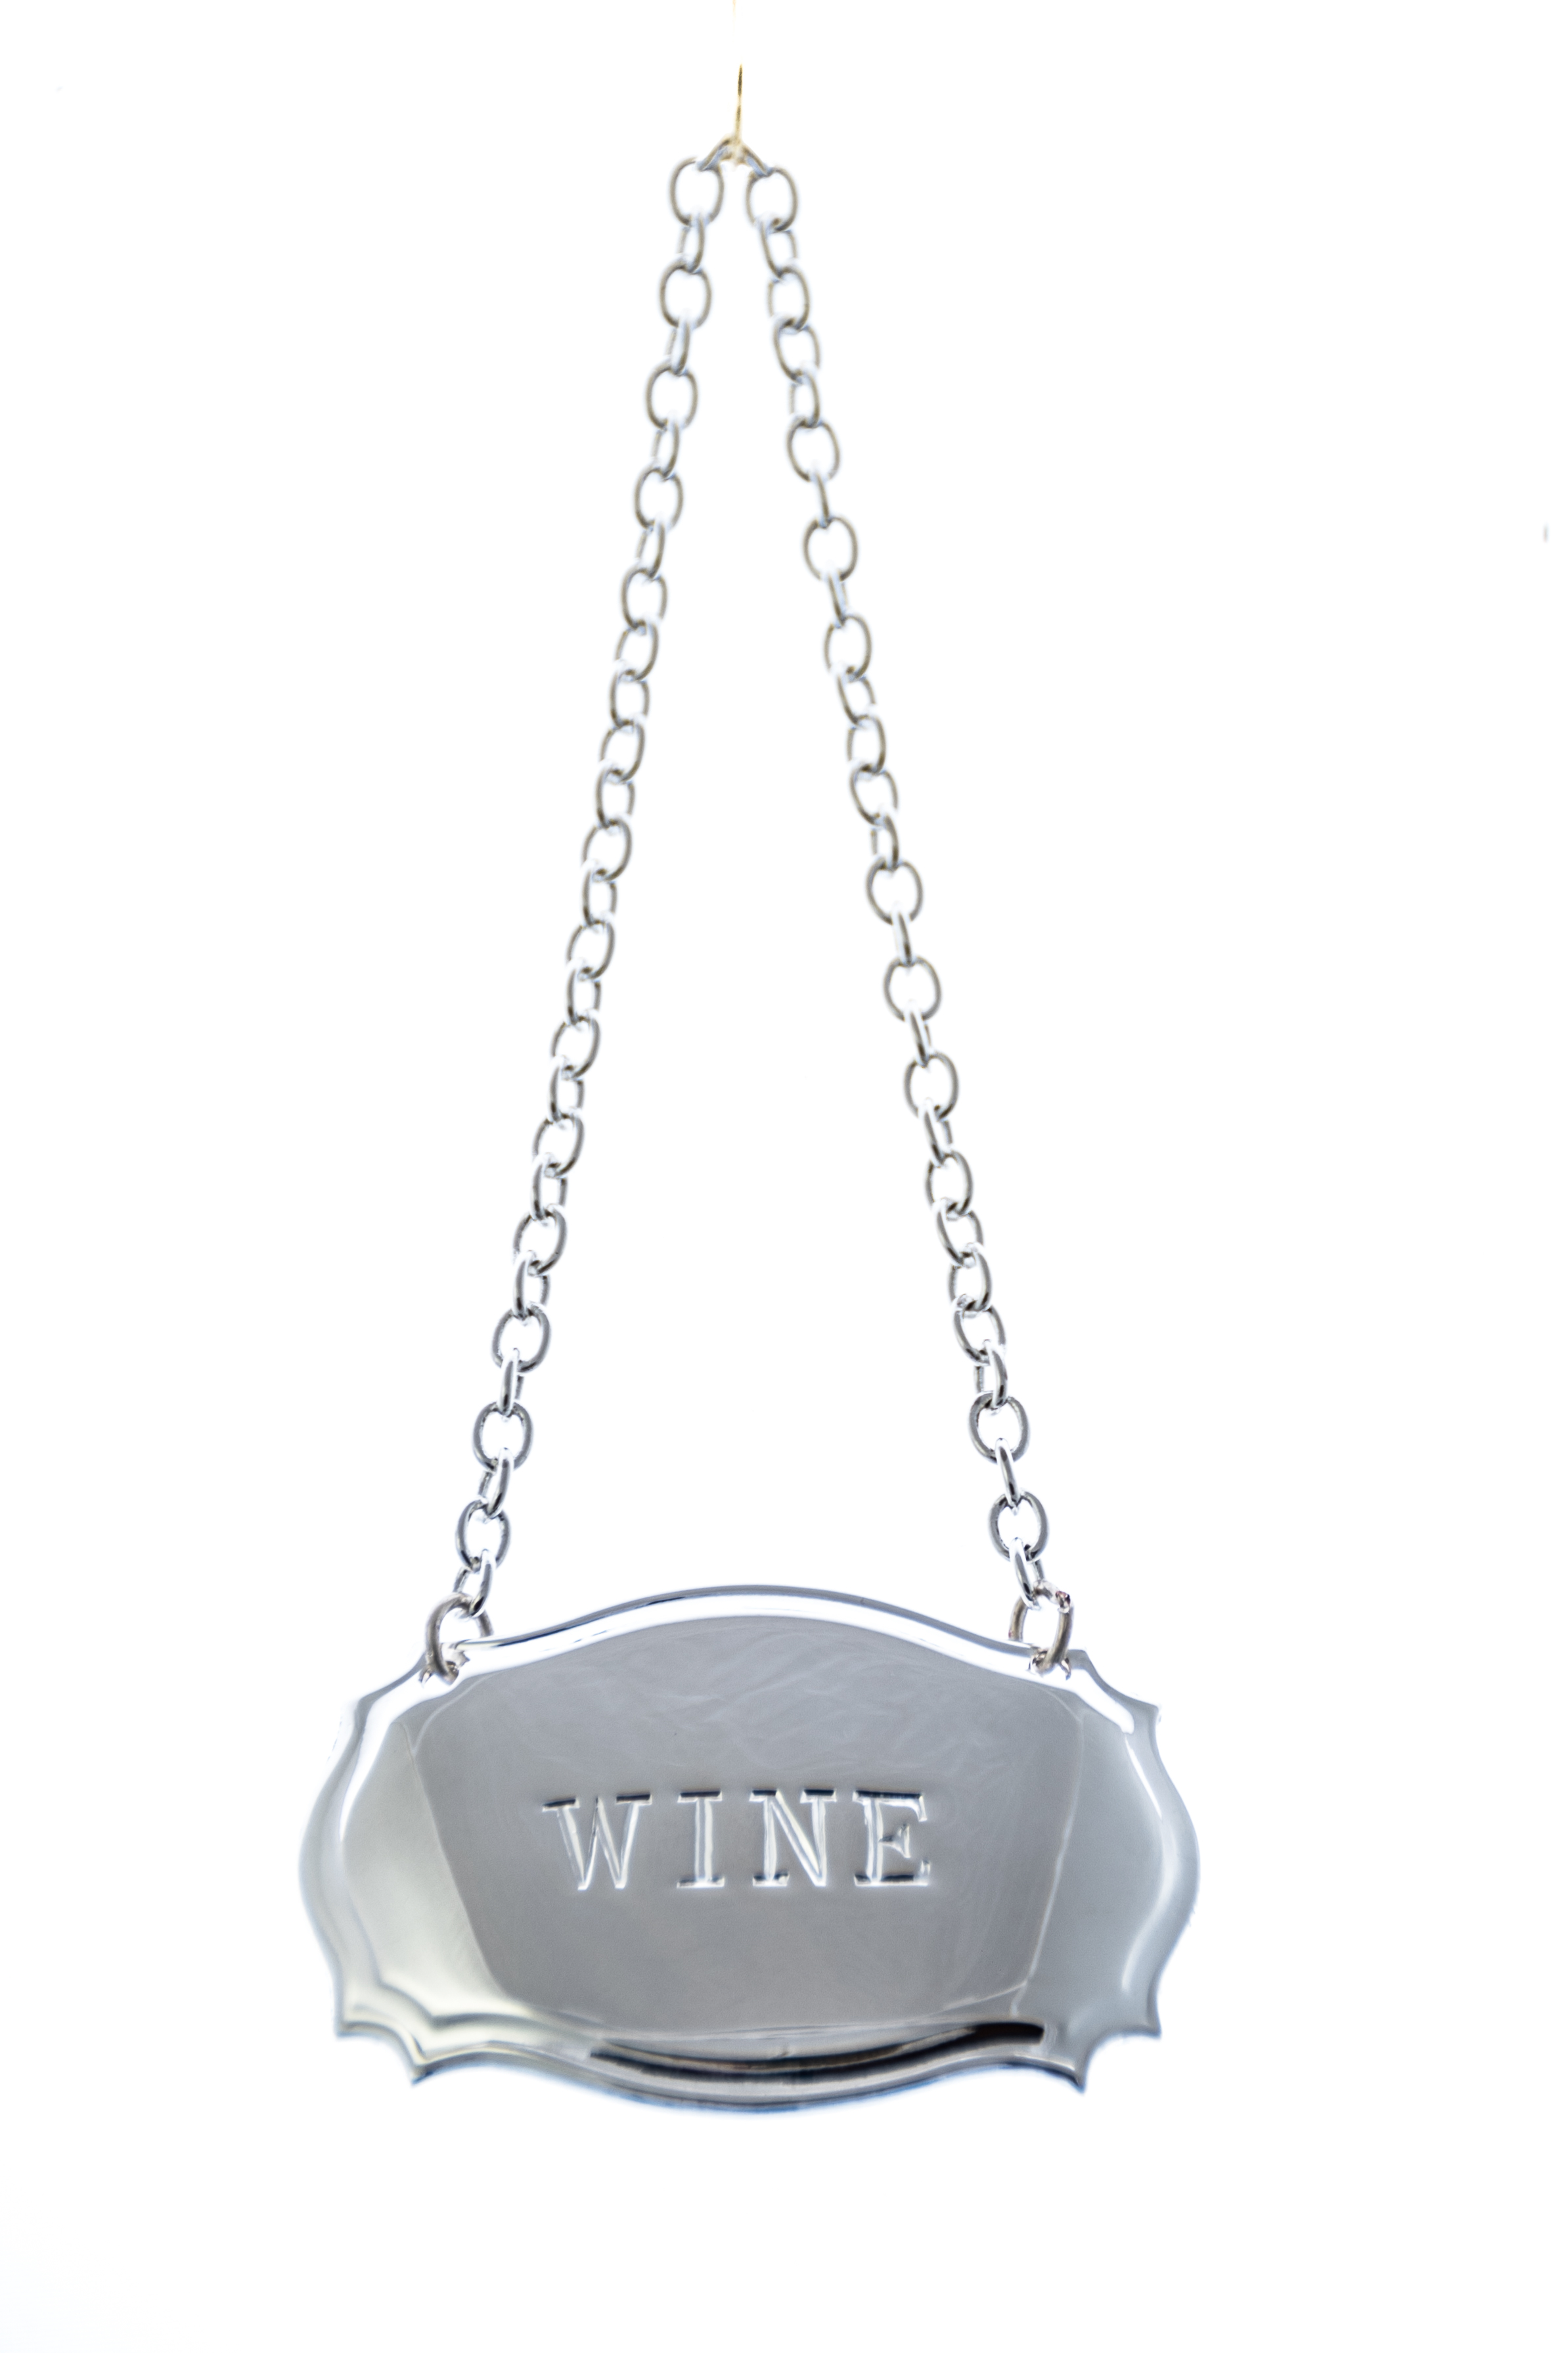 Decanter Label Chippendale Design Wine Silver Plate